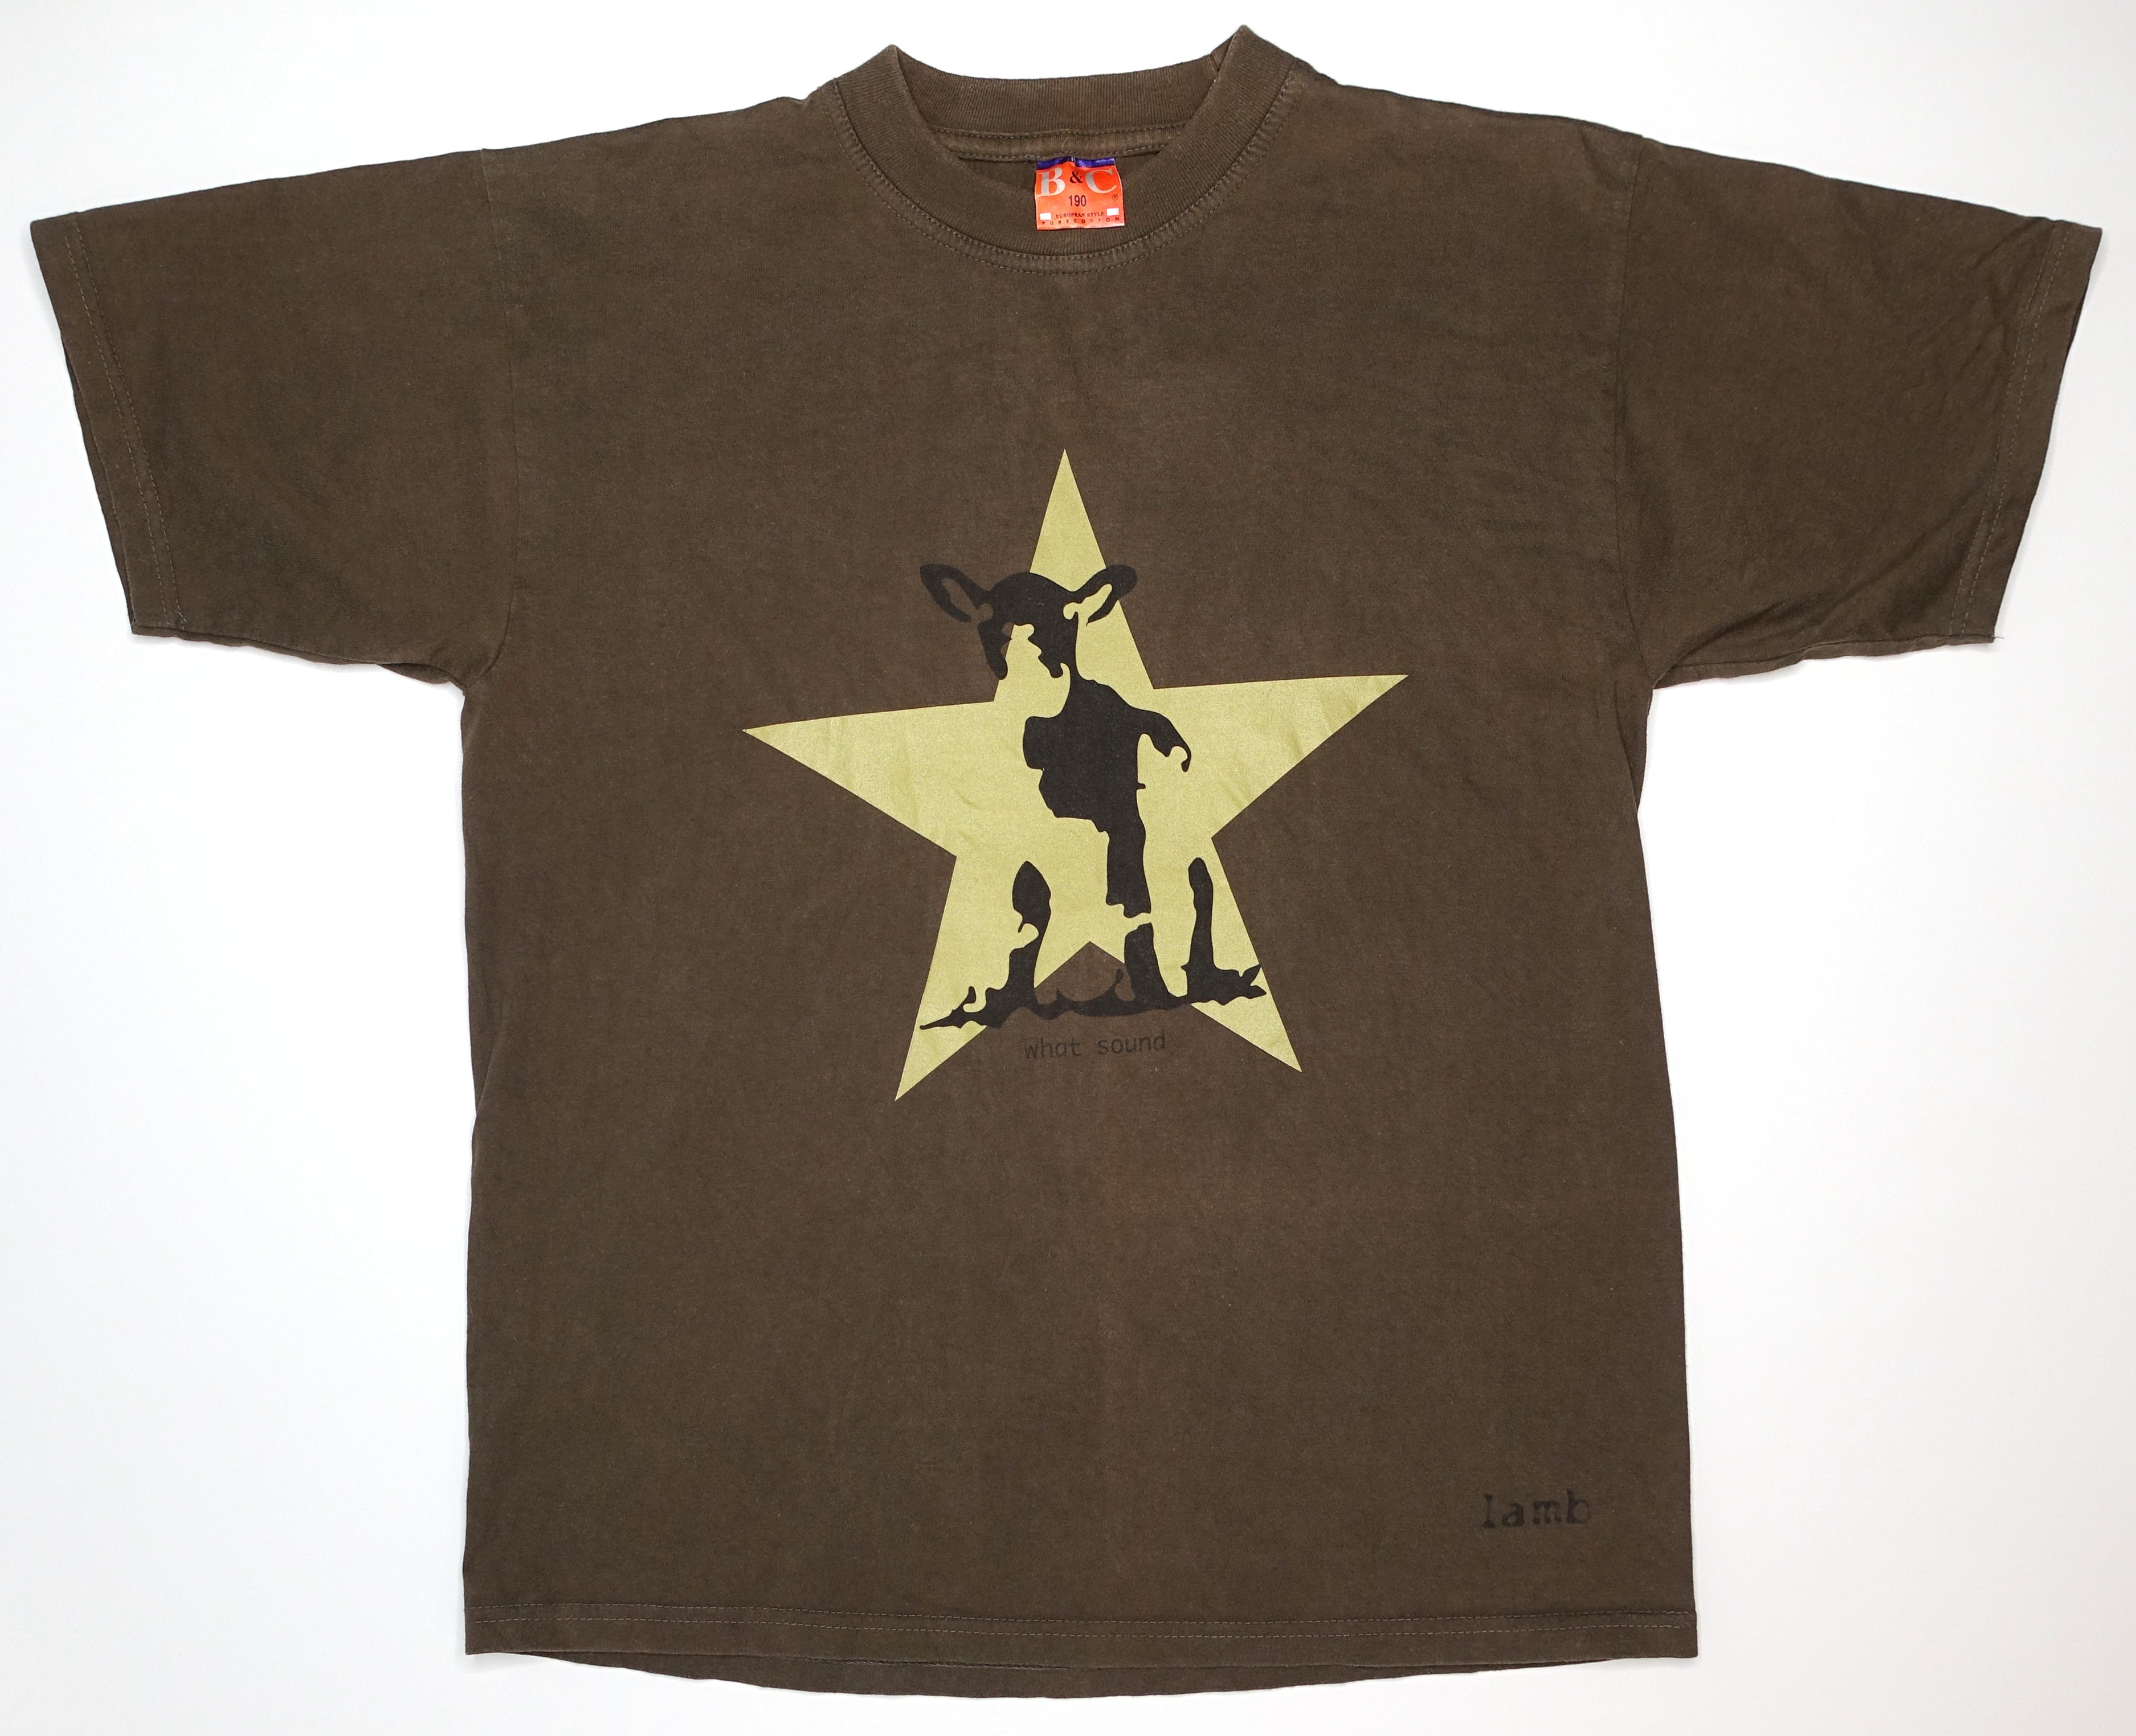 Lamb ‎– Star / What Sound? 2001 Tour Shirt Size Large